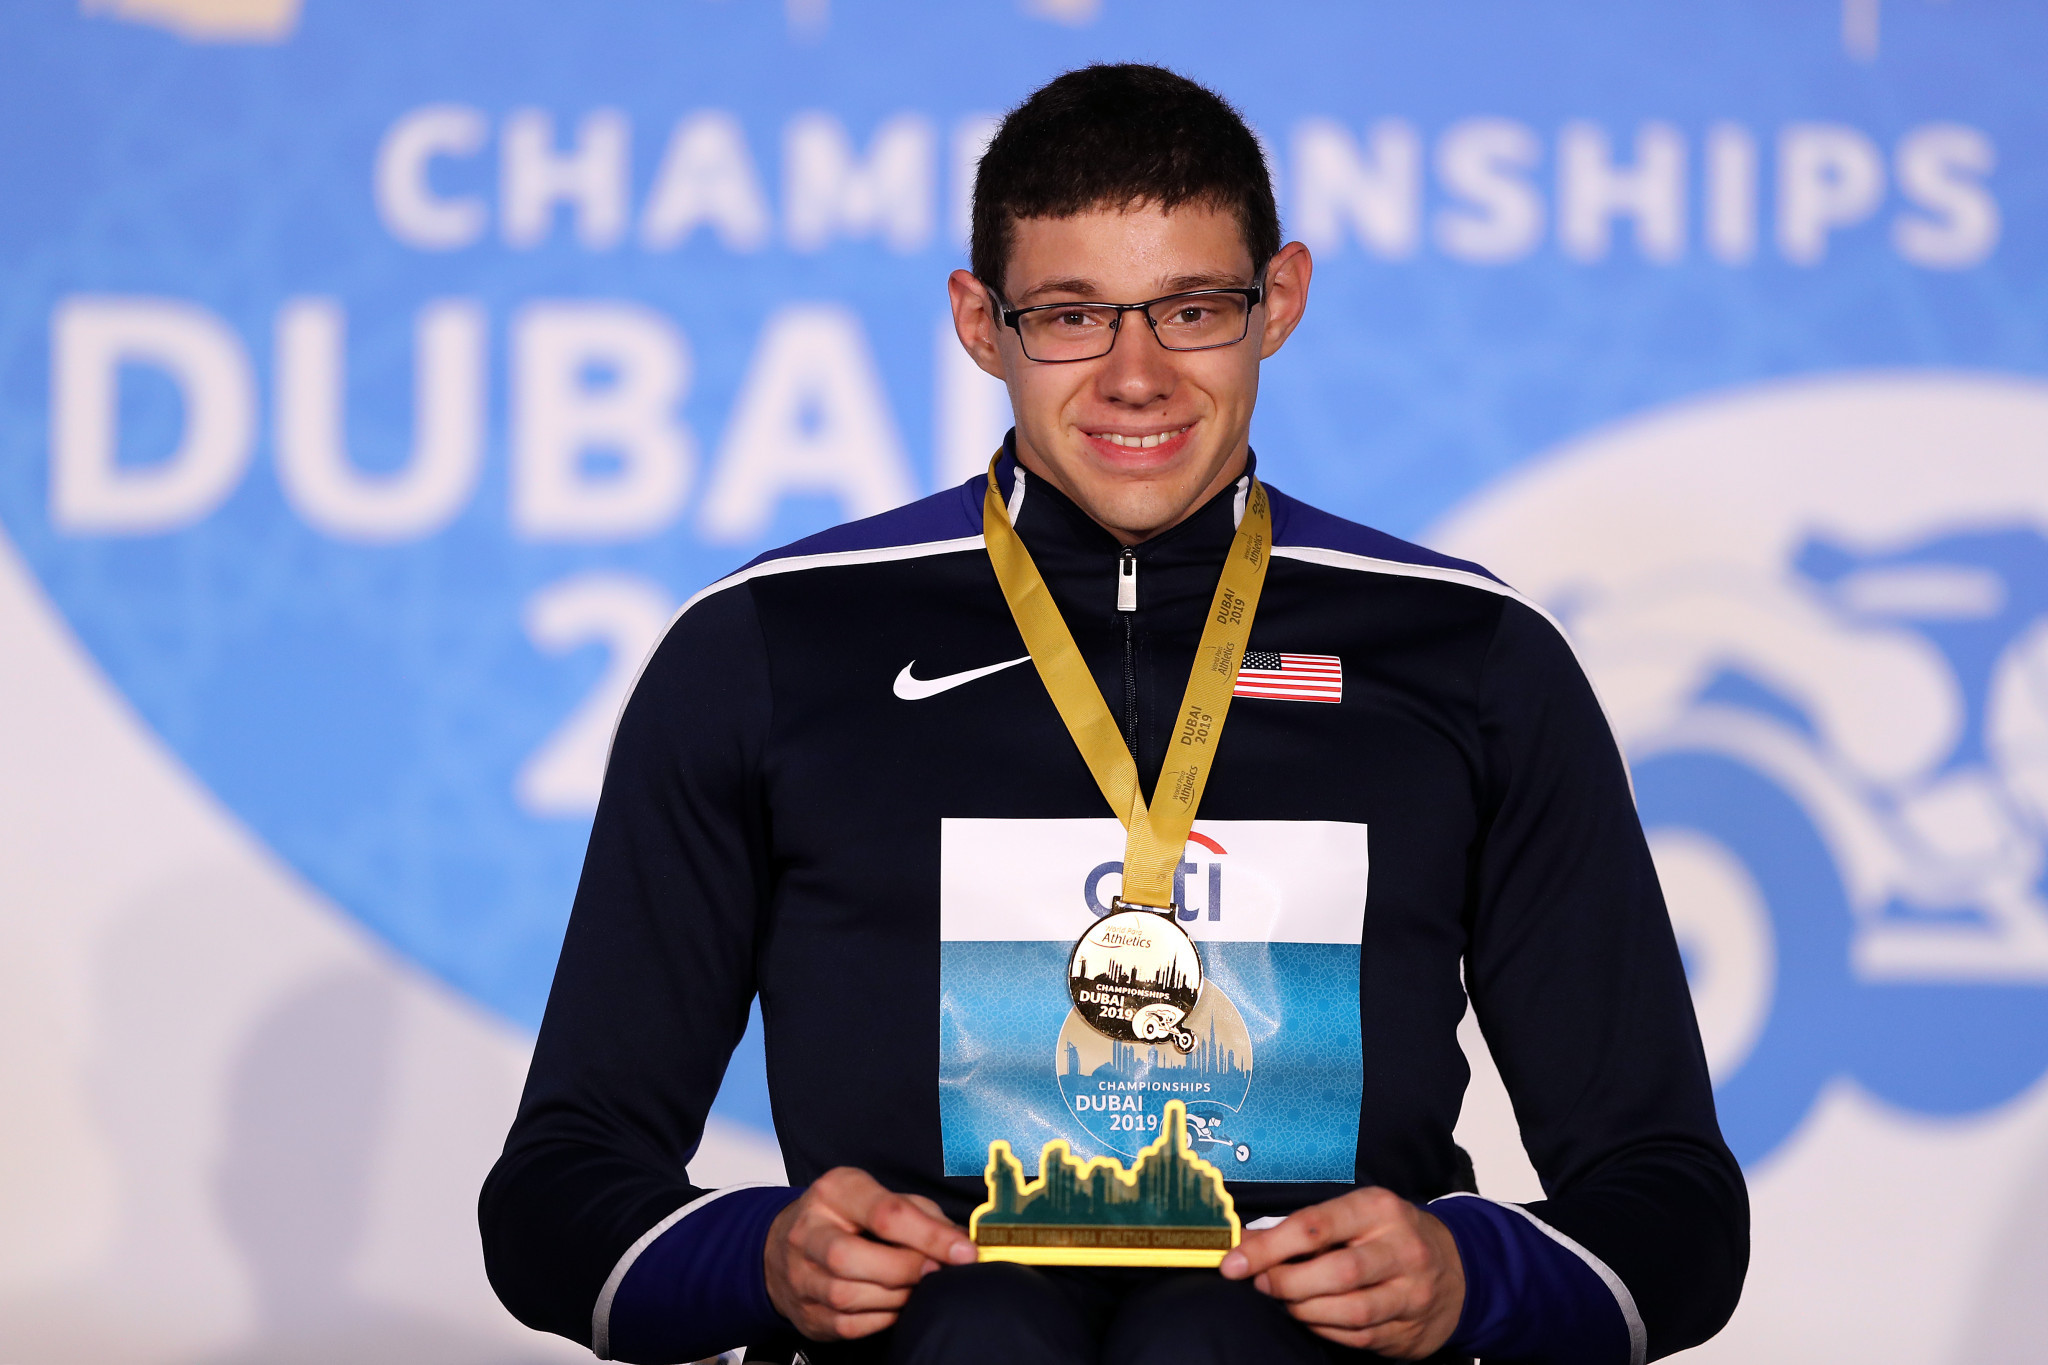 Romanchuk among winners at World Para Athletics Championships in Dubai